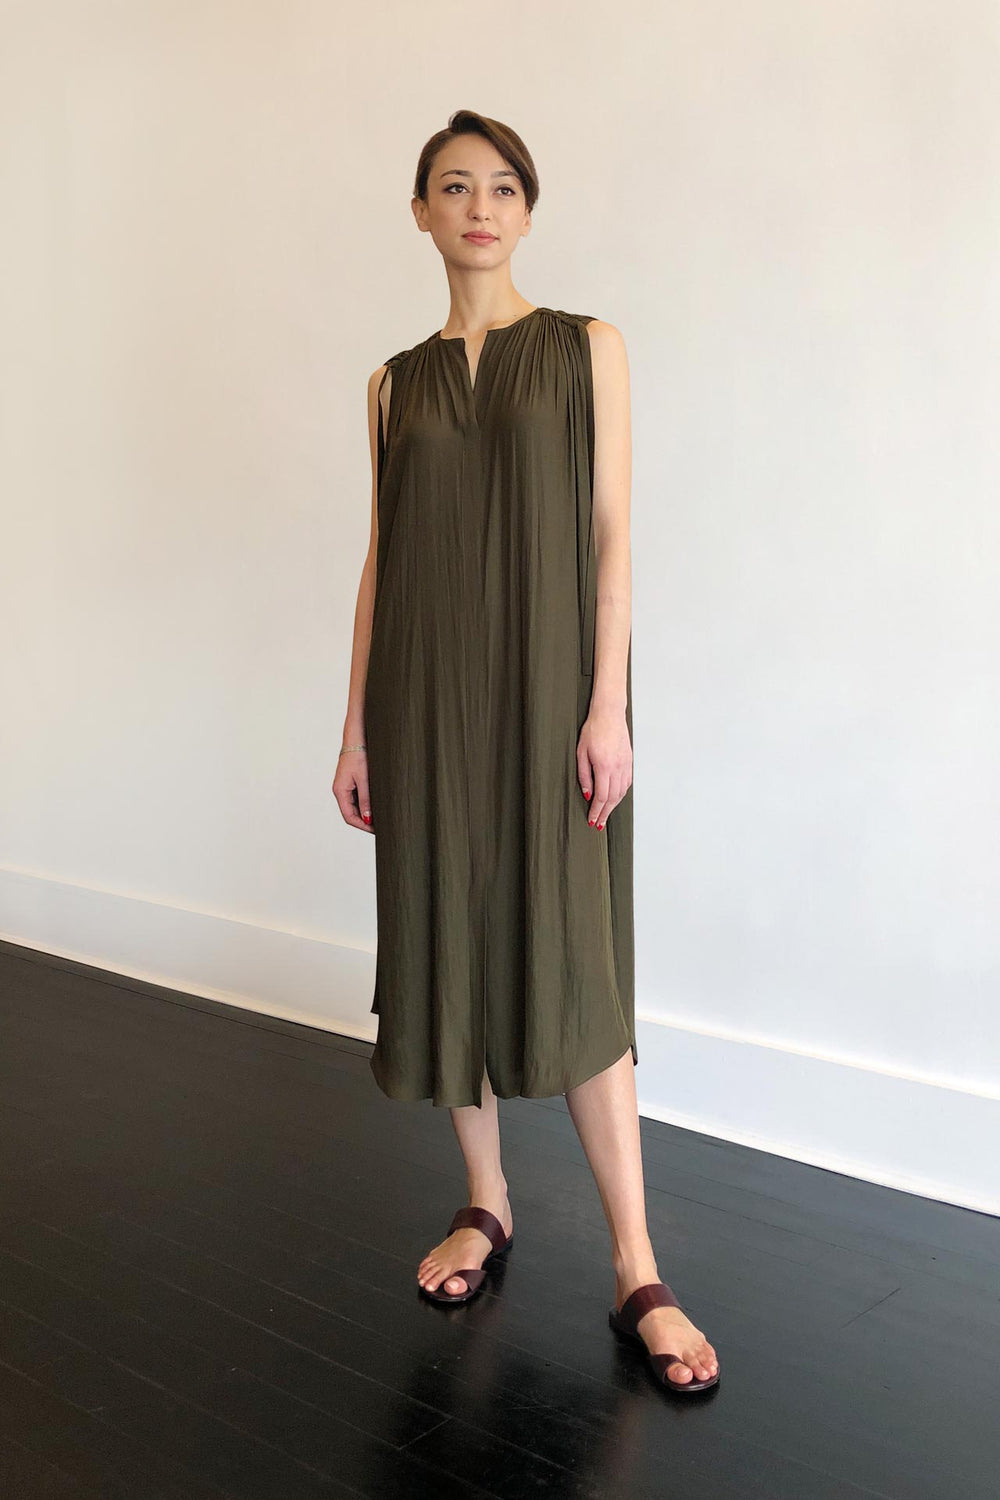 Fashion Designer CARL KAPP collection | Patatran Onesize Fits All cocktail dress Khaki | Sydney Australia